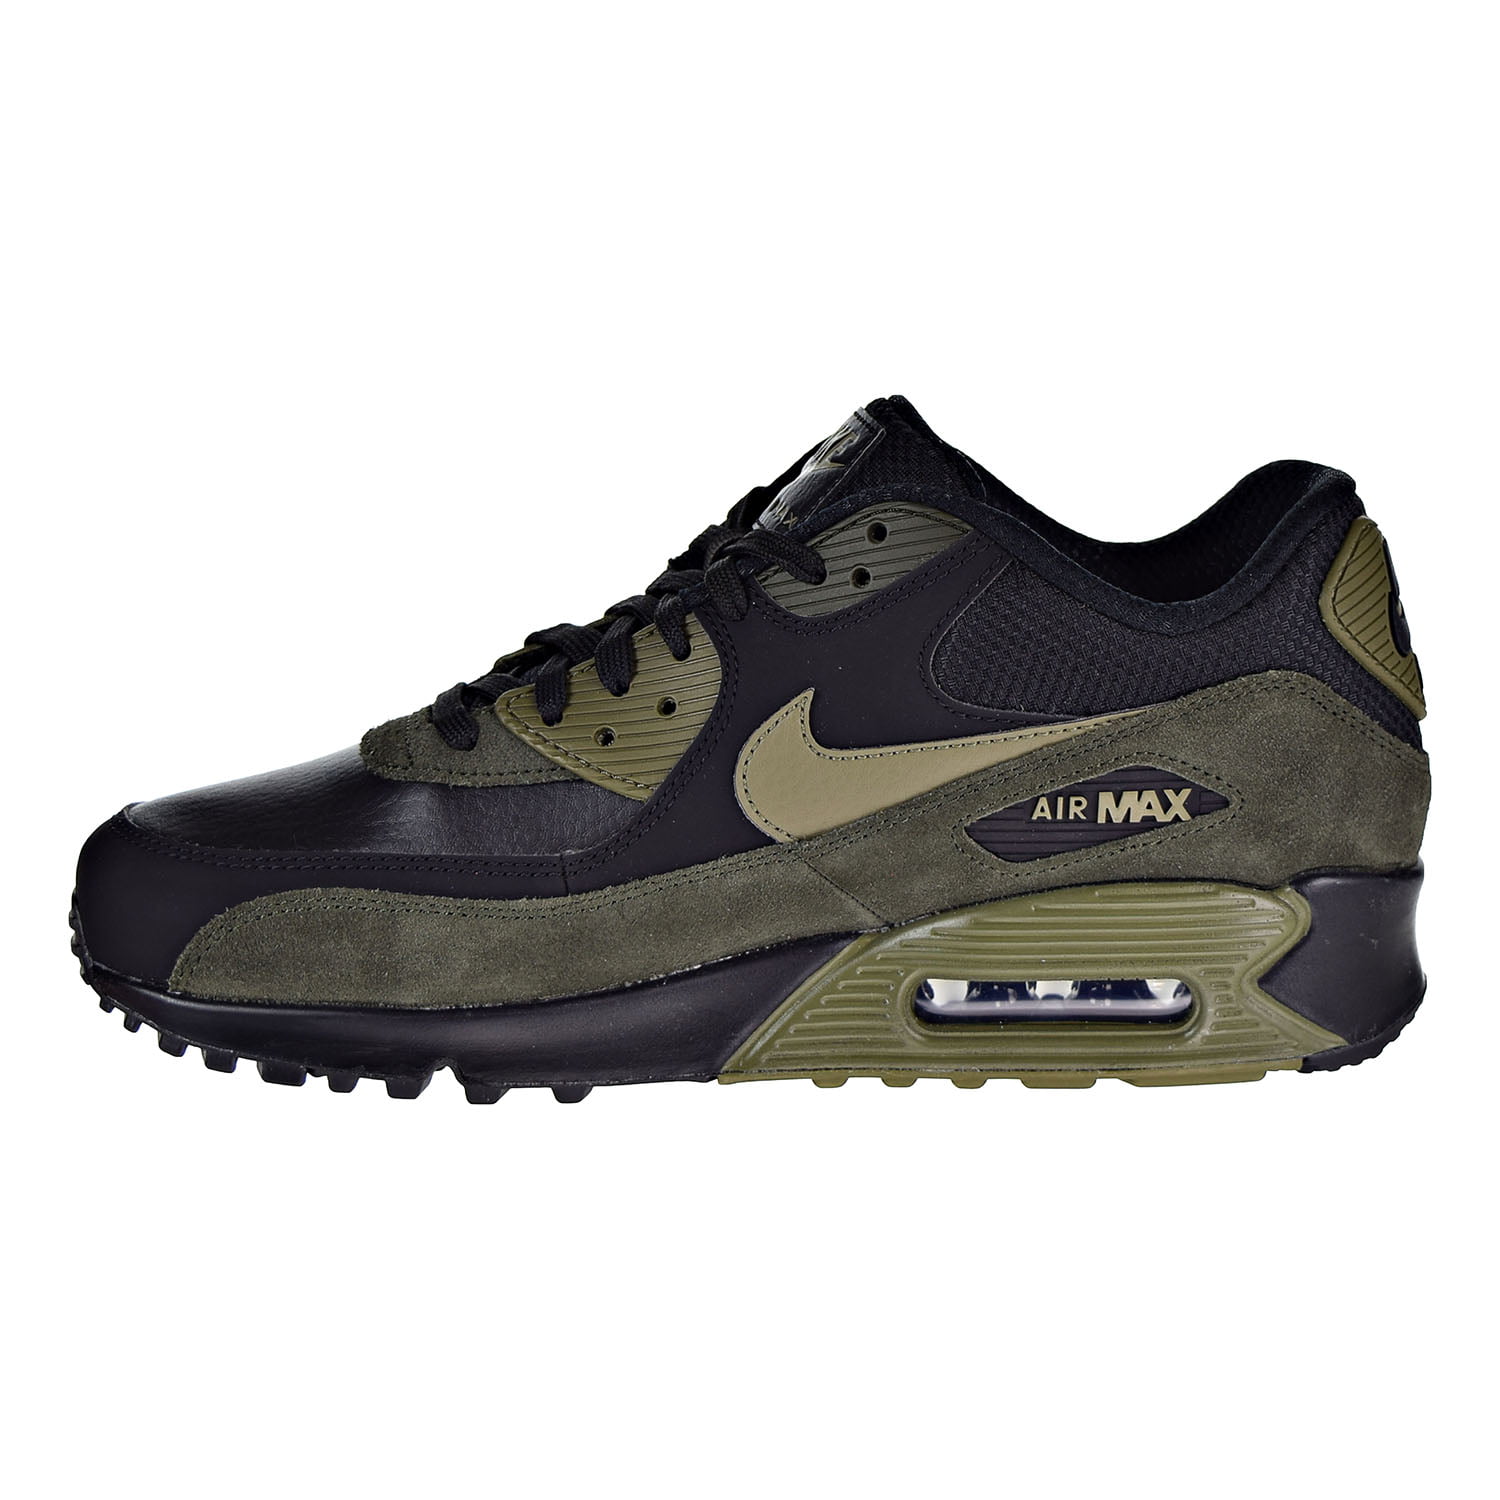 Nike Air Max 90 Leather Men's Shoes Black/Medium Olive-Sequoia 302519-014